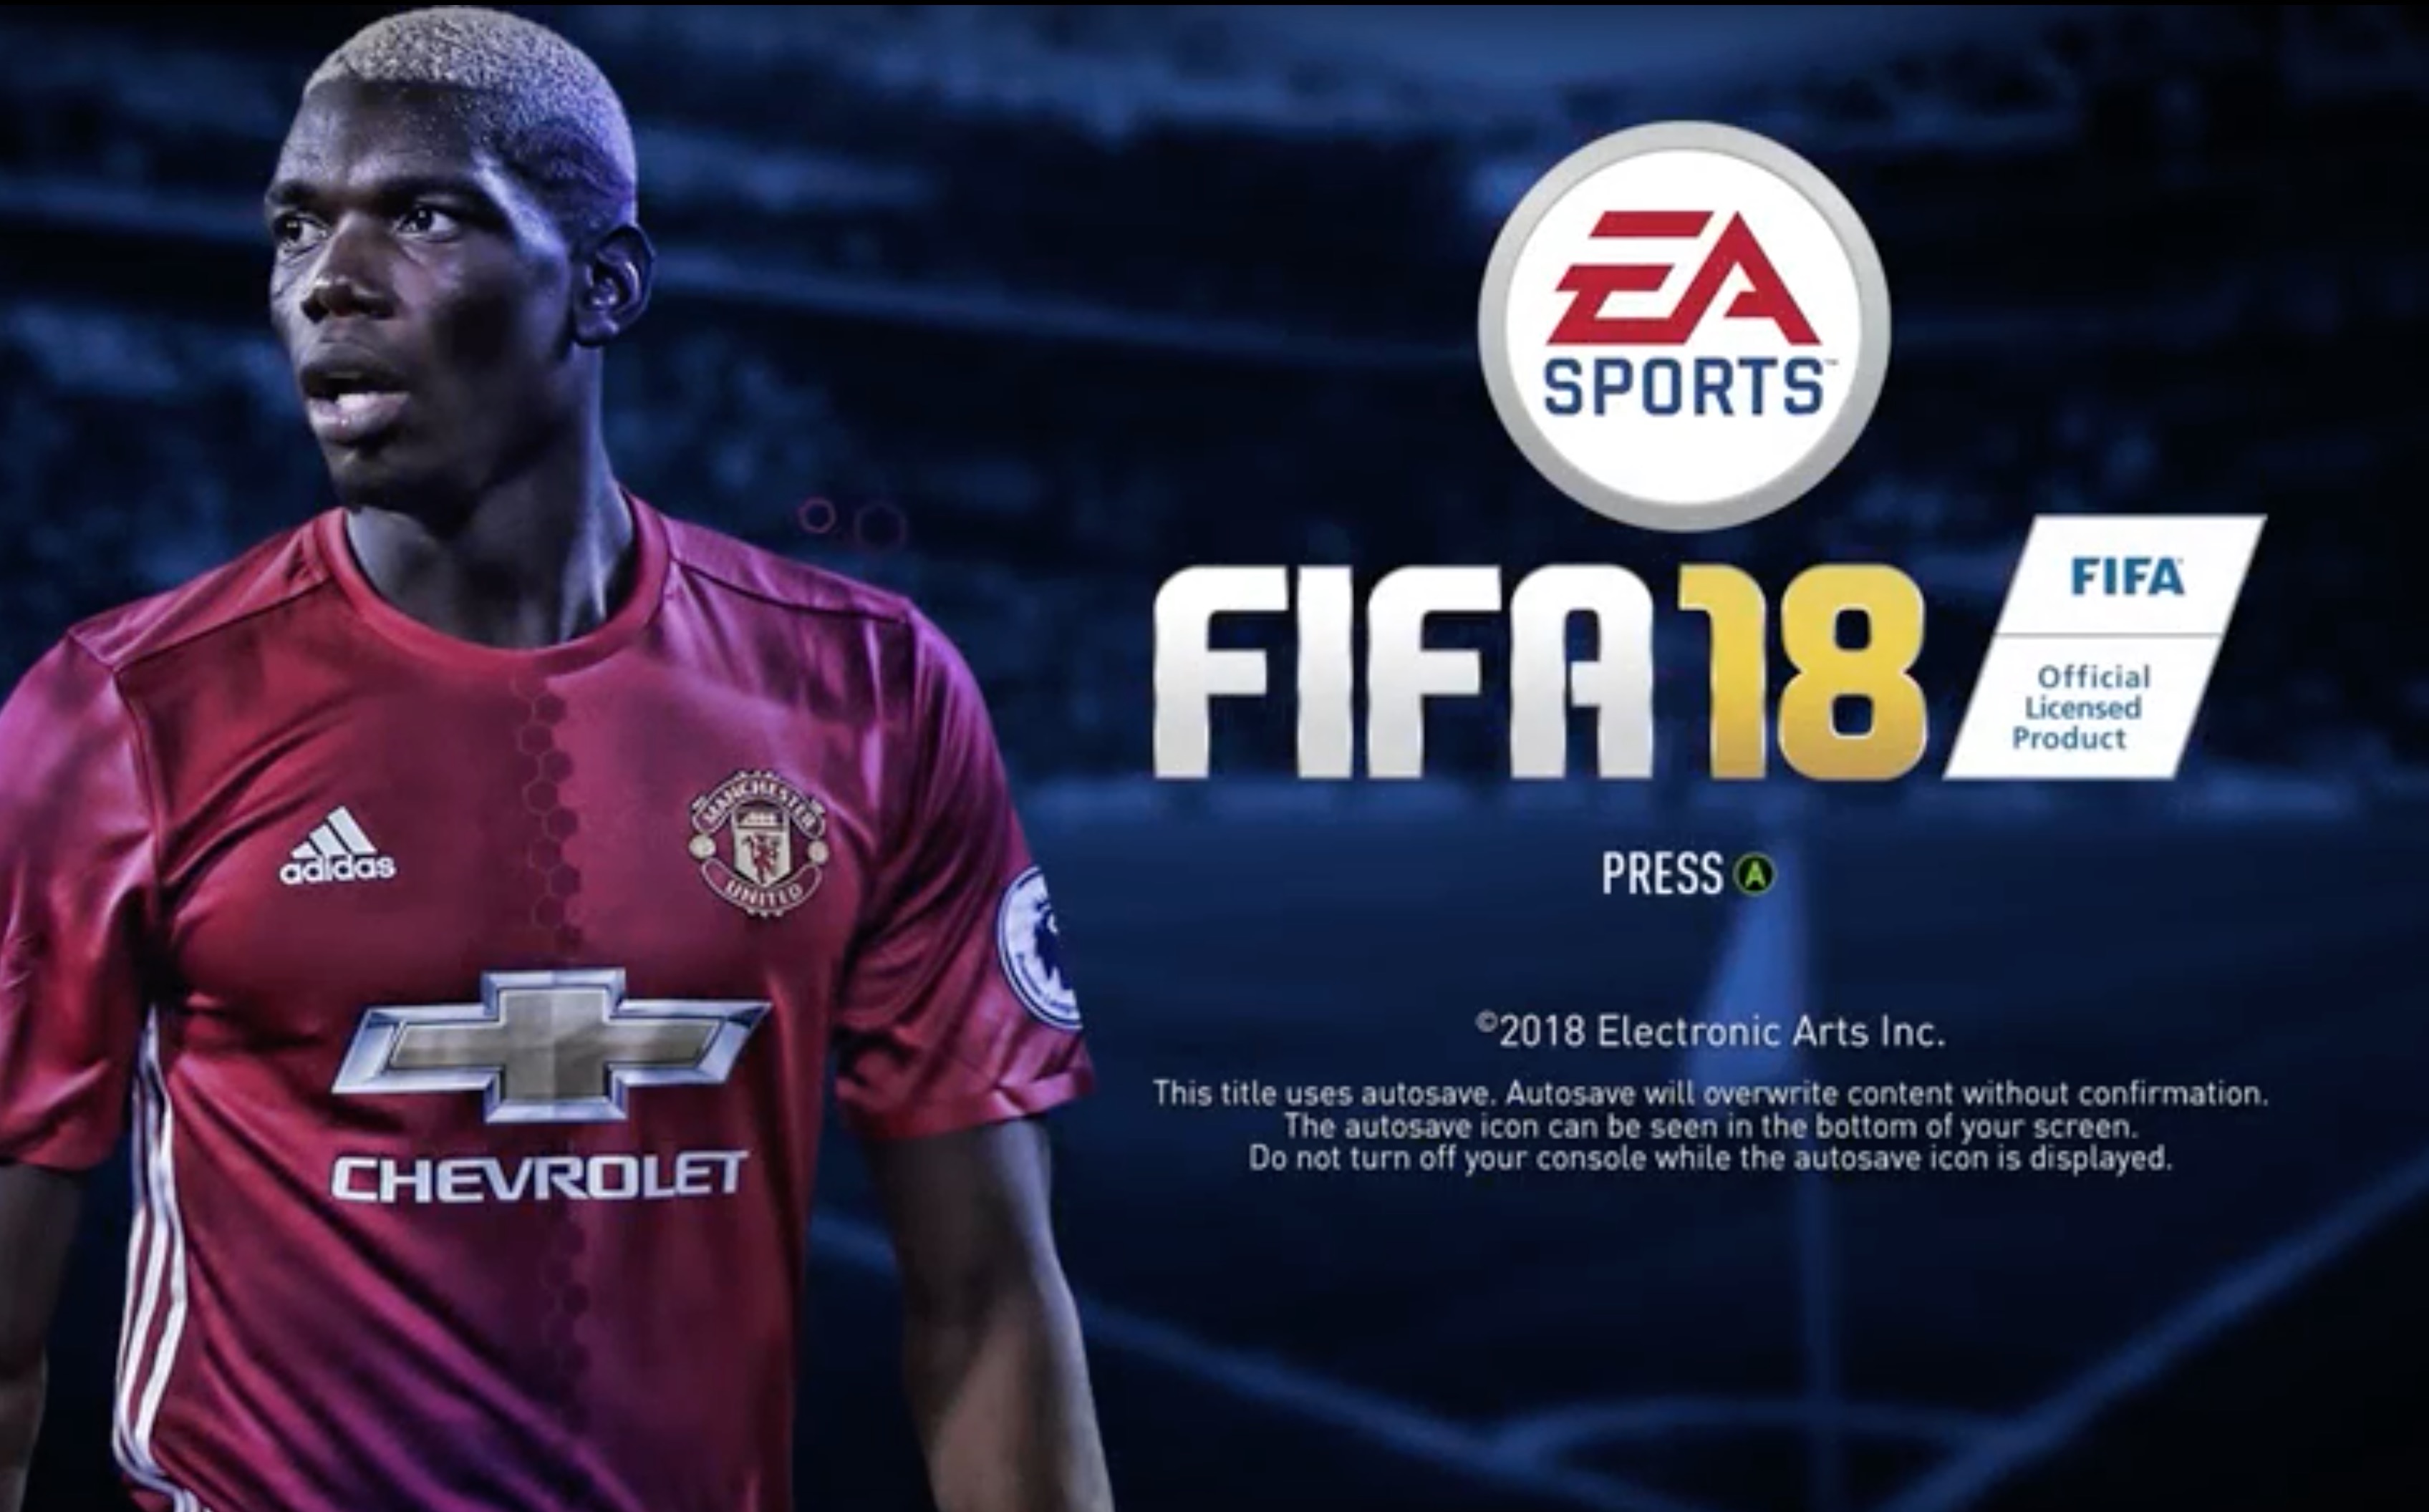 FIFA 18 video